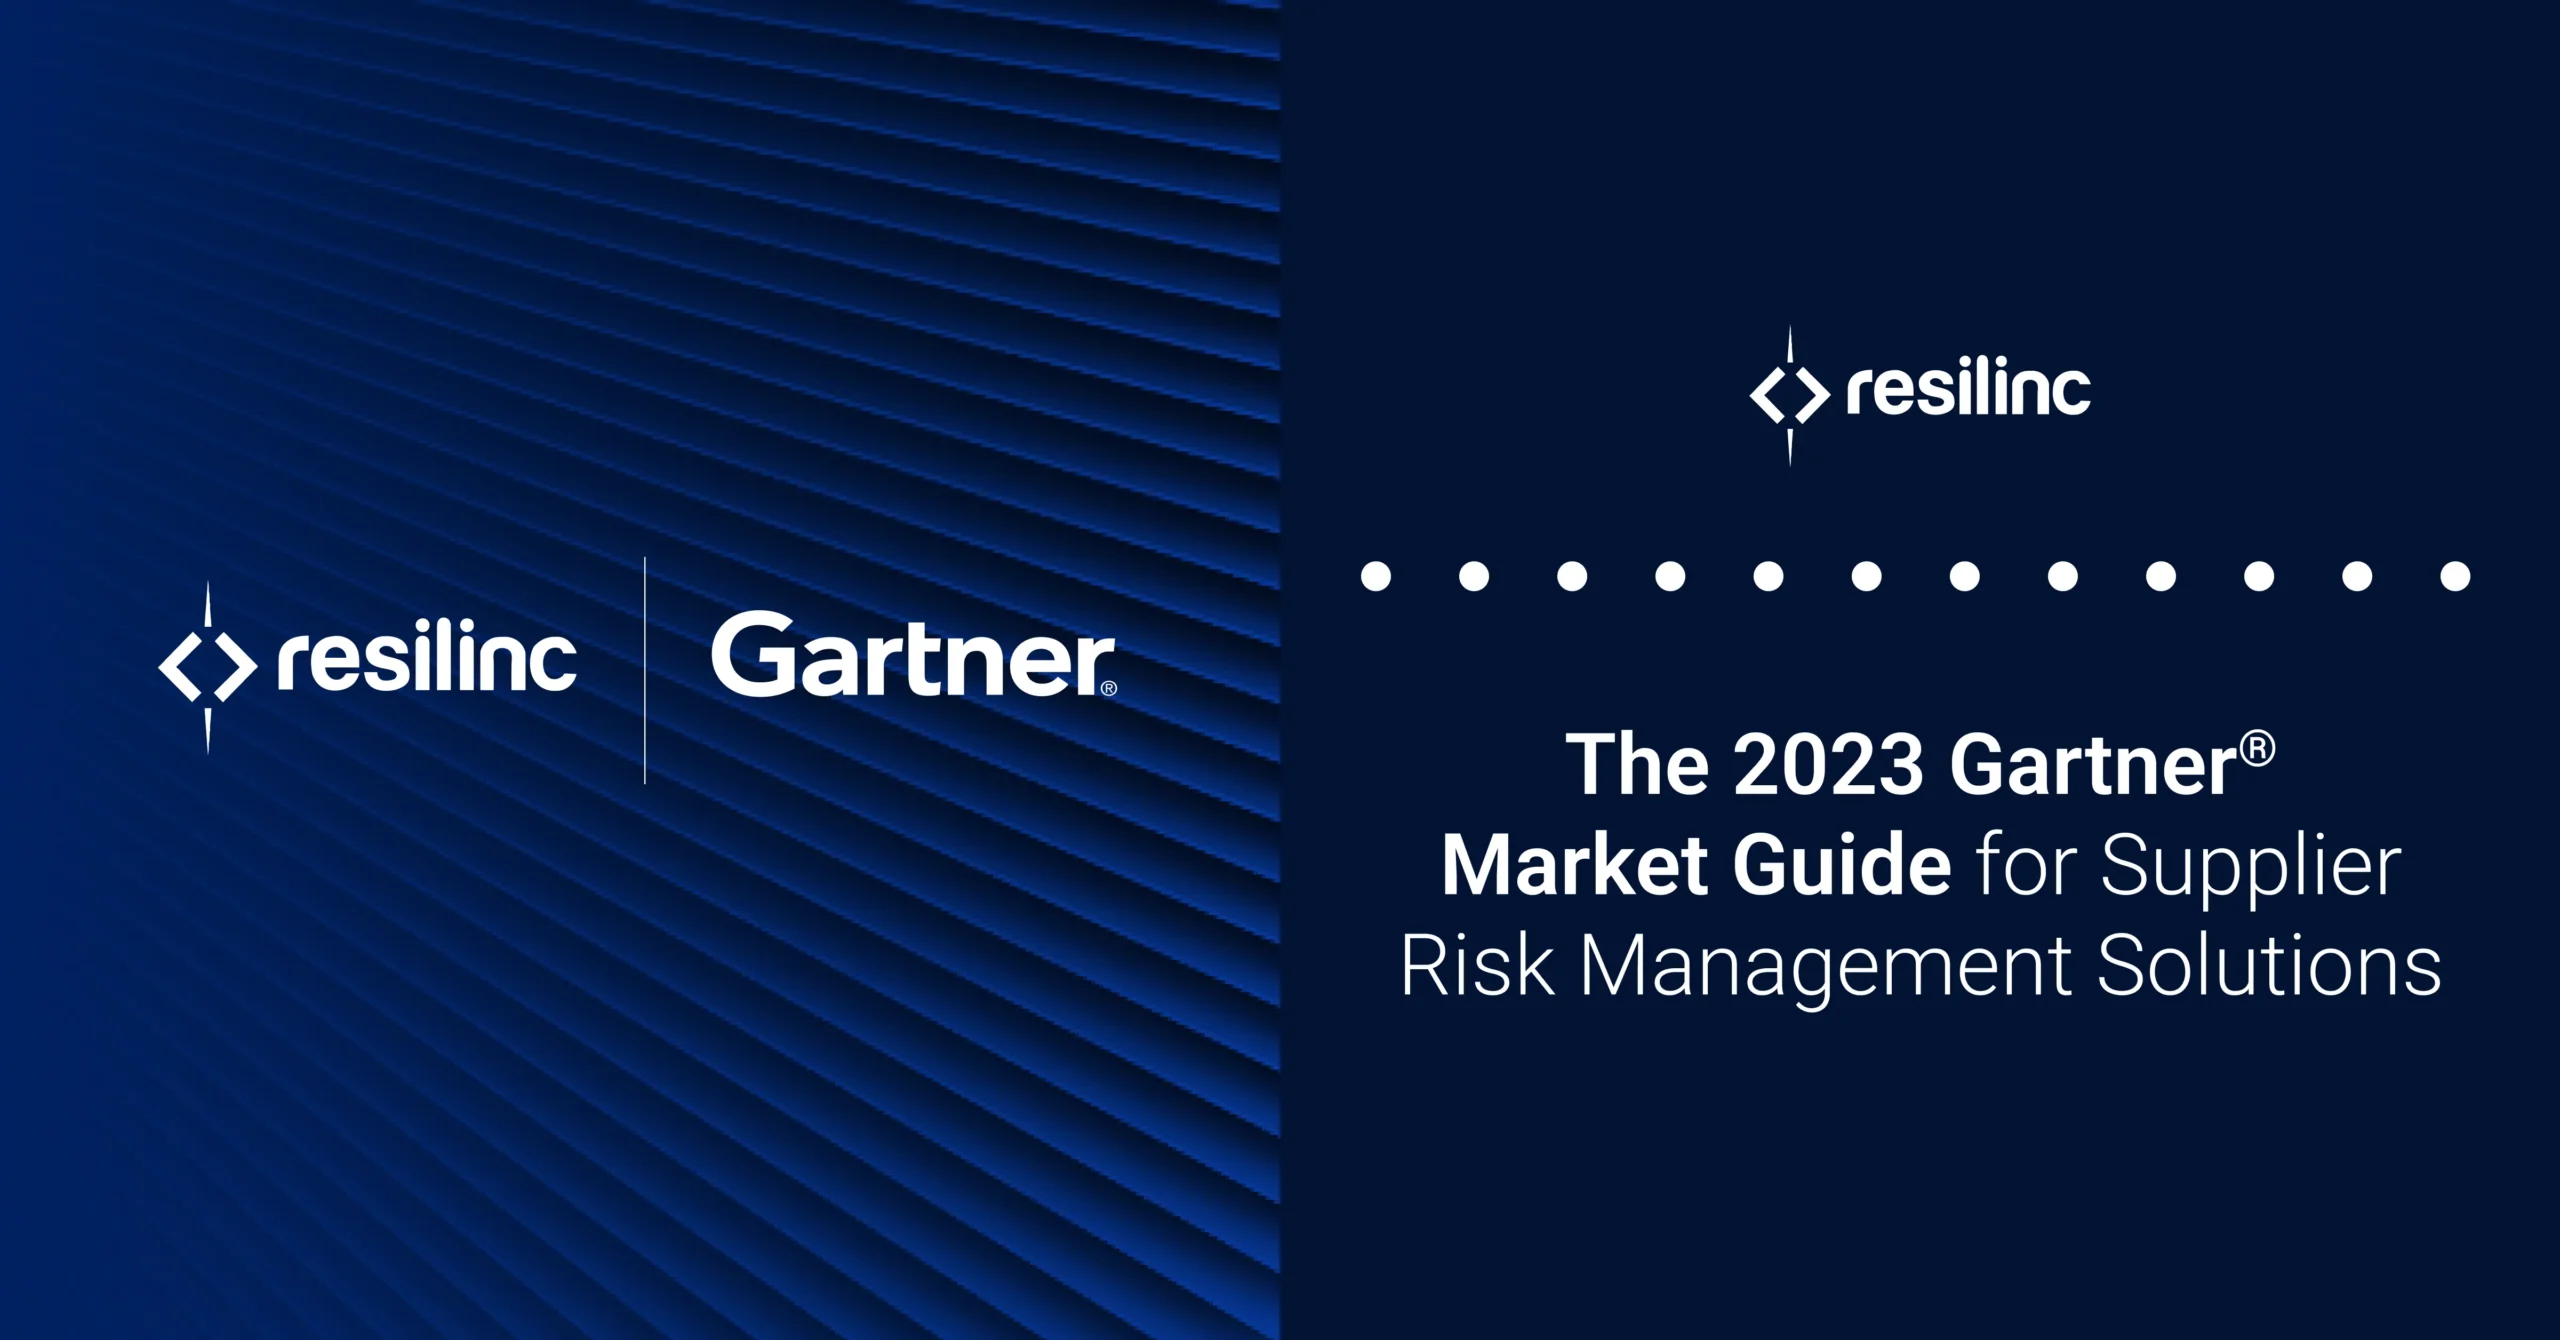 The 2023 Gartner® Market Guide for Supplier Risk Management Solutions